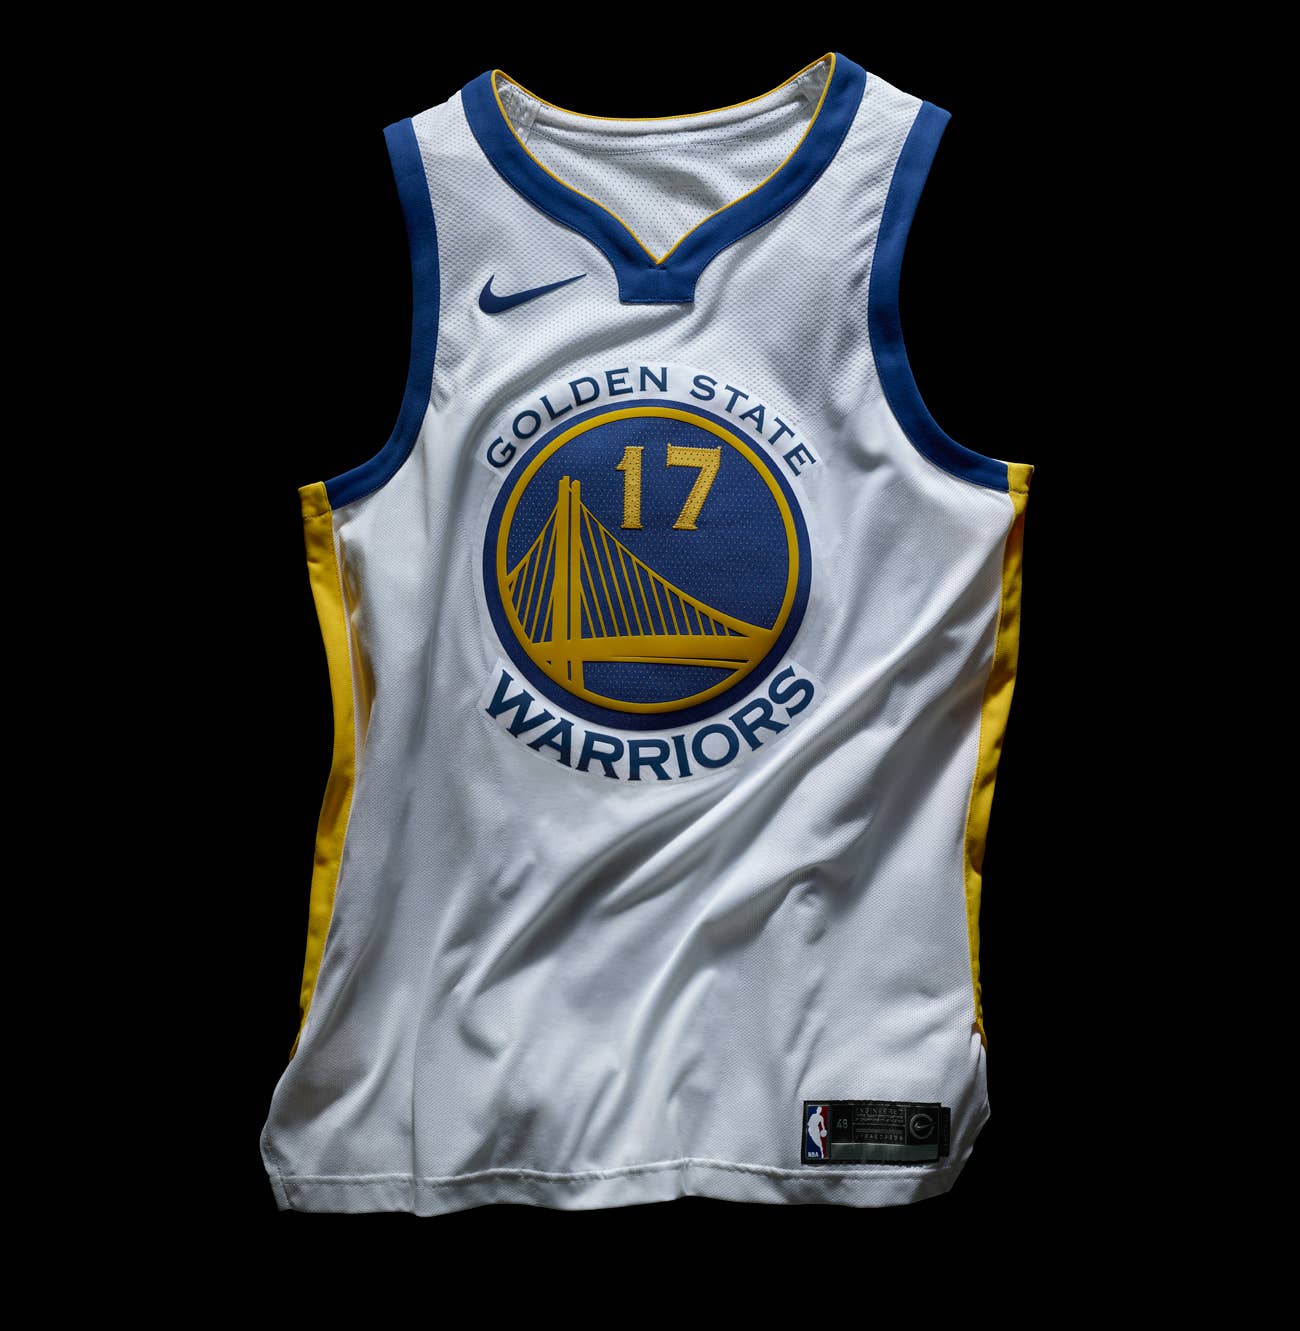 Golden State Warriors unveil new uniforms